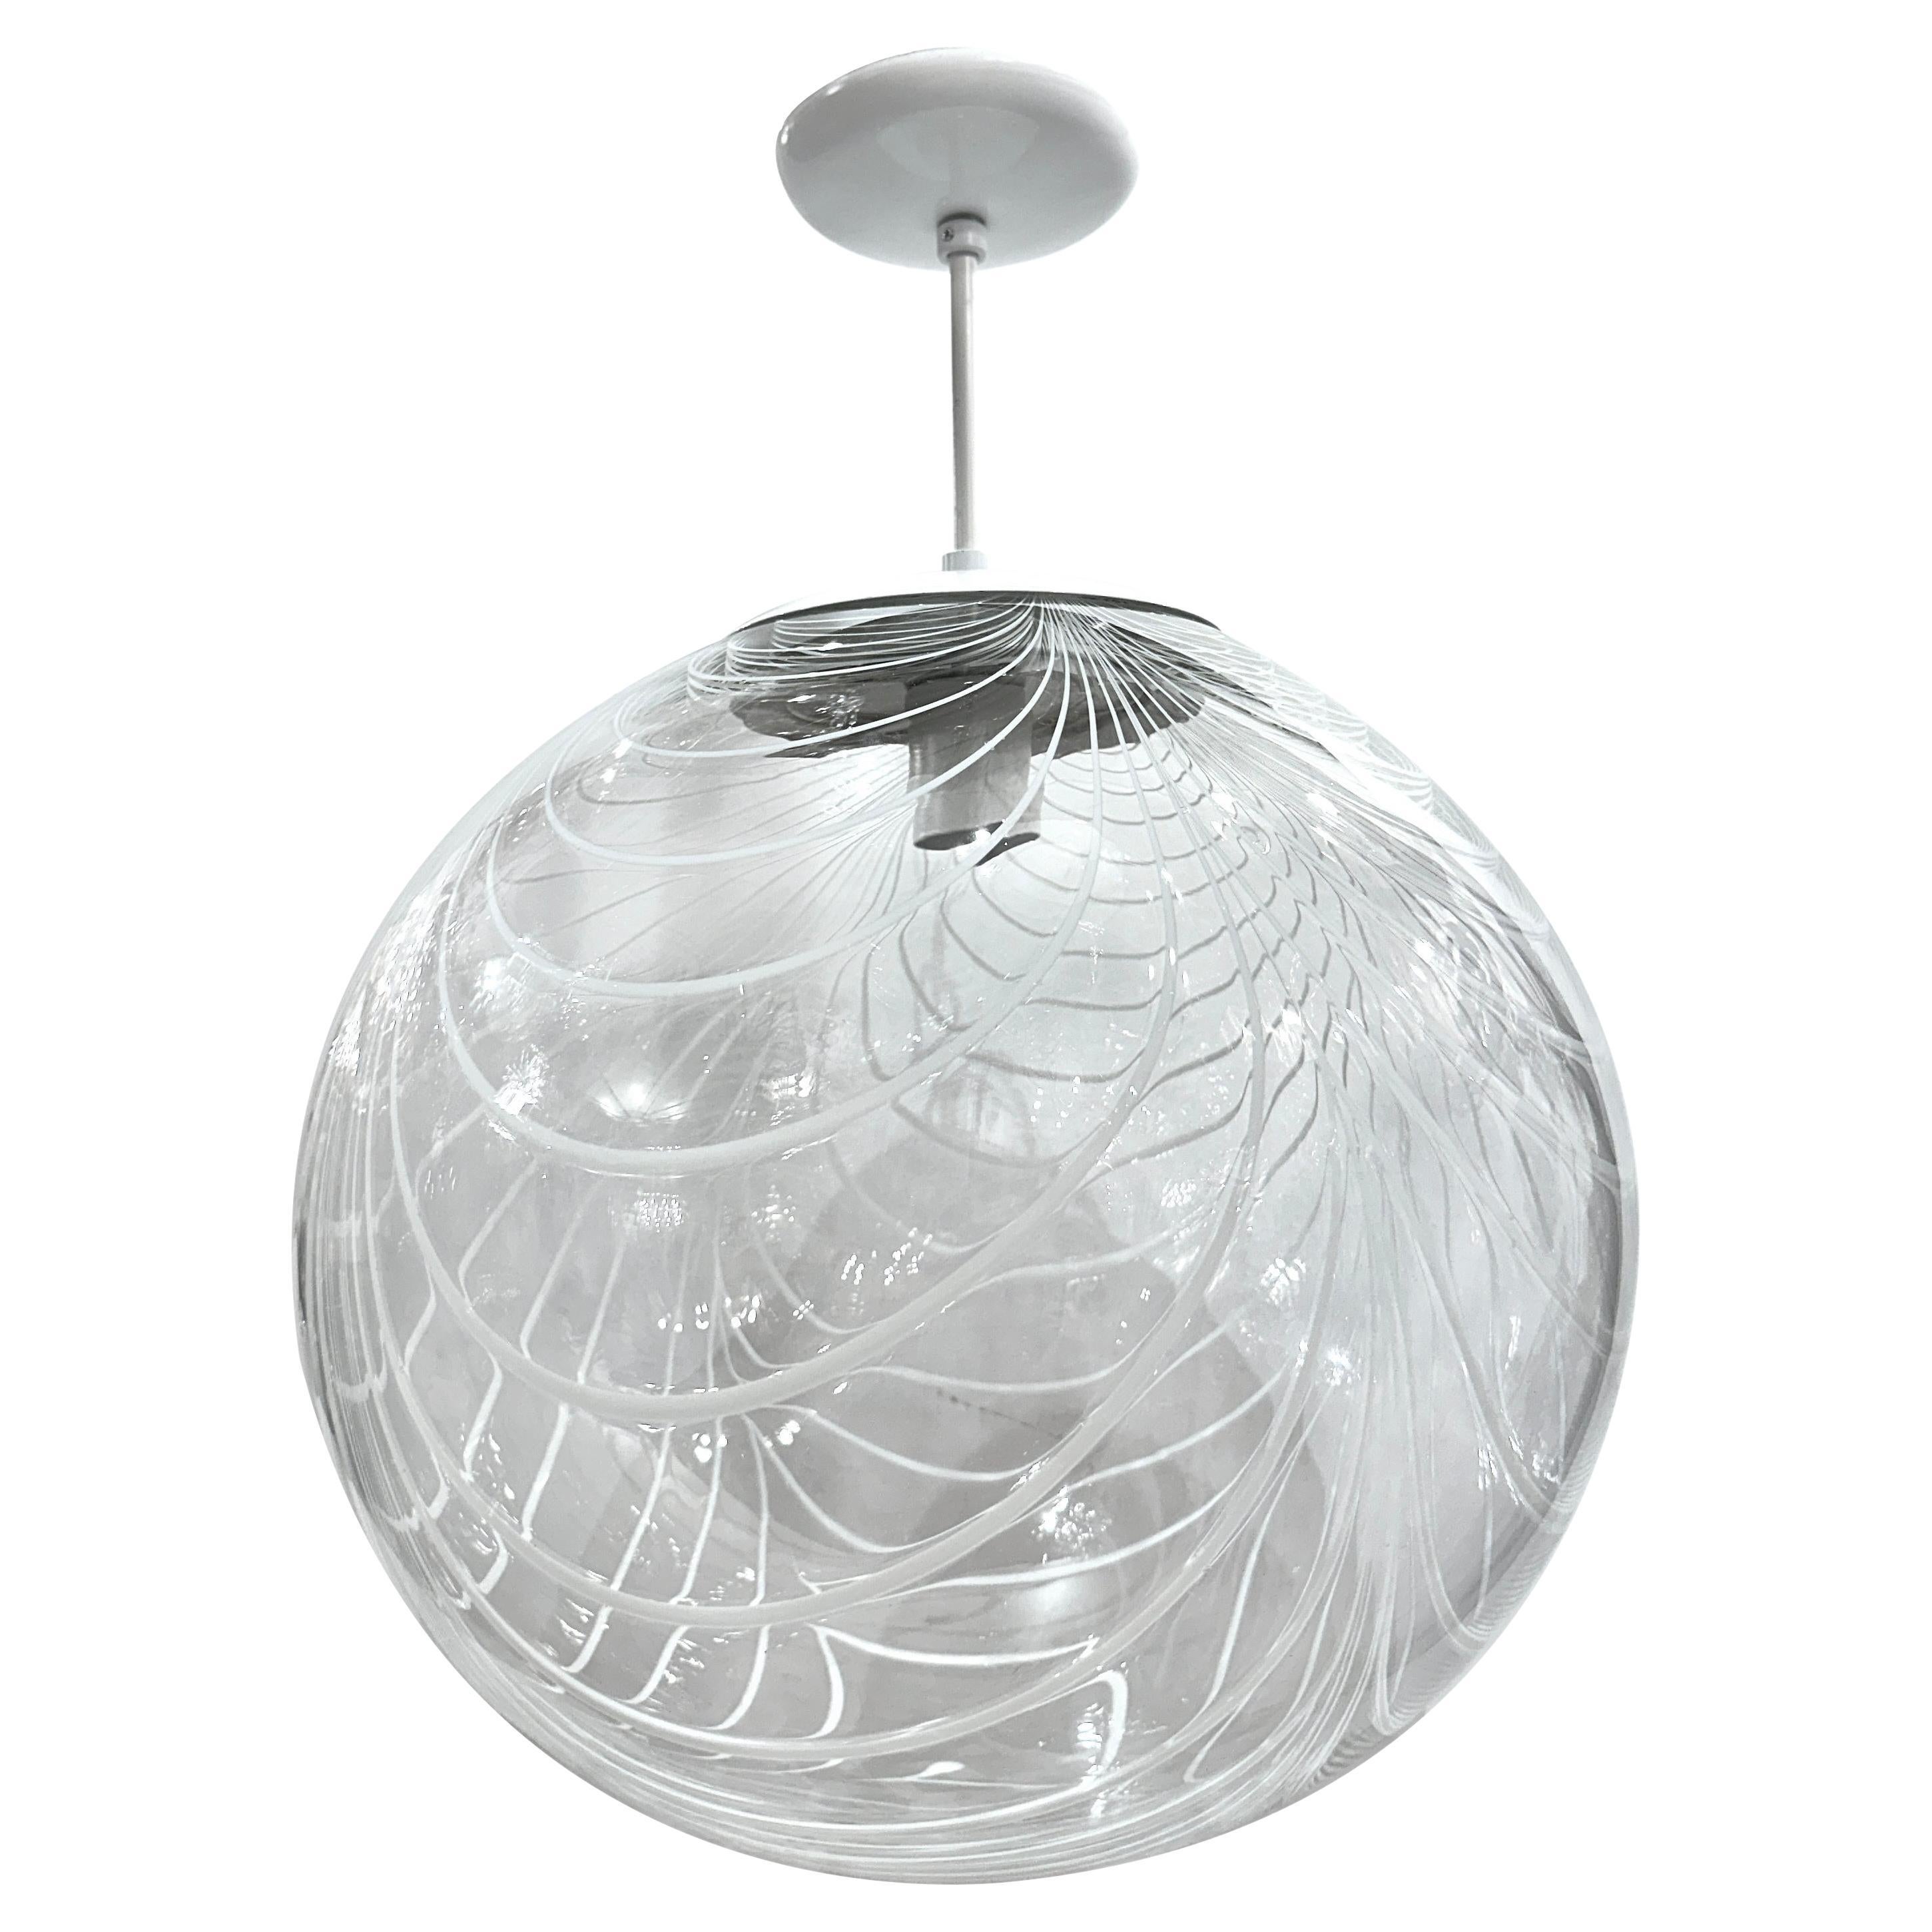 Set of Blown Glass Globe Lanterns, Sold Individually